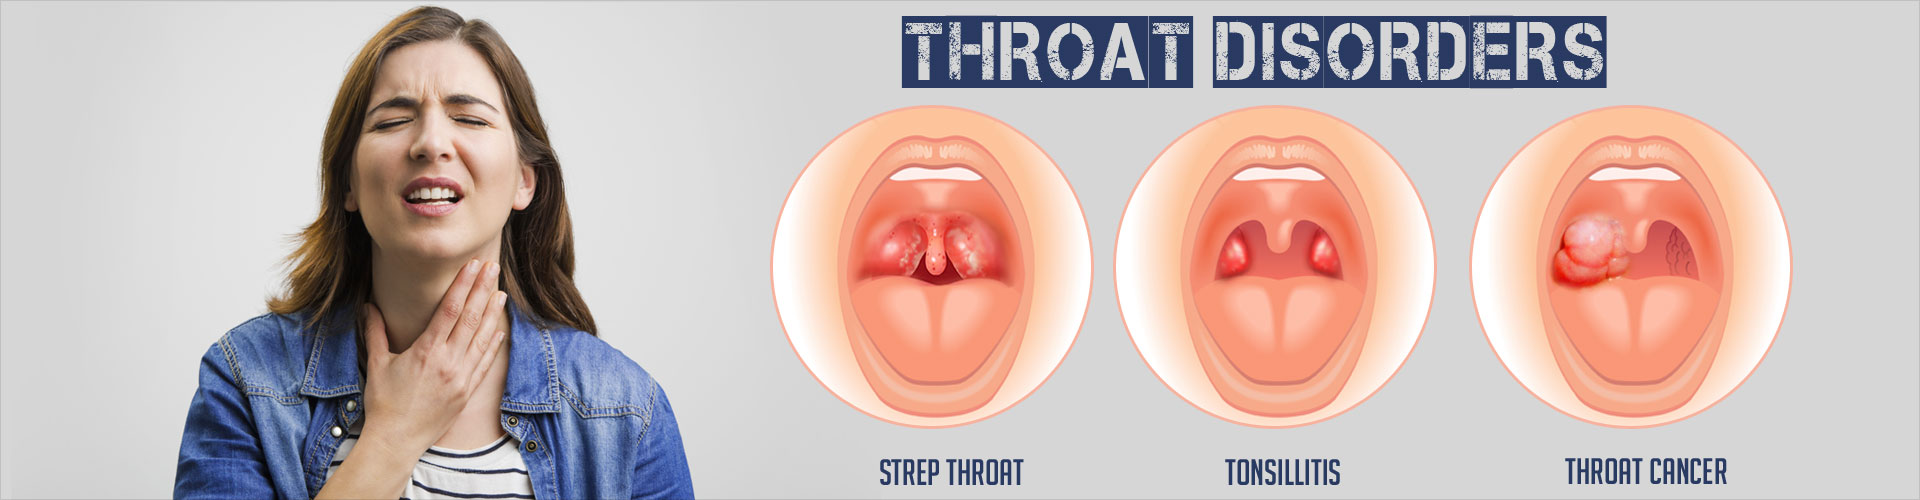 Throat Disorder 89